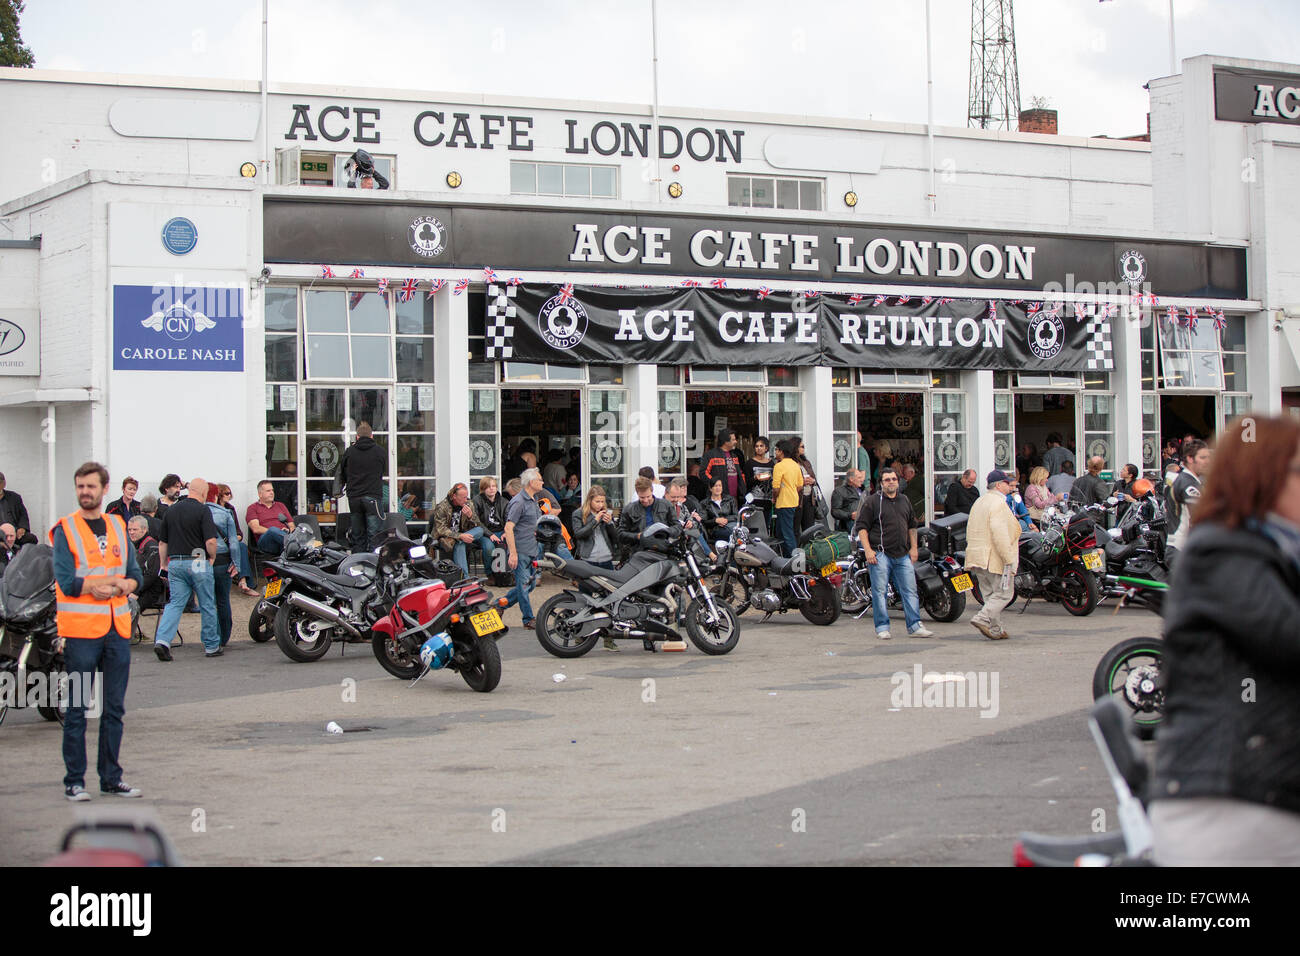 Ace Cafe, North London, UK, 14th September, 2014. The Ace Cafe bikers cafe  Reunion Credit: Fantastic Rabbit/Alamy Live News Stock Photo - Alamy